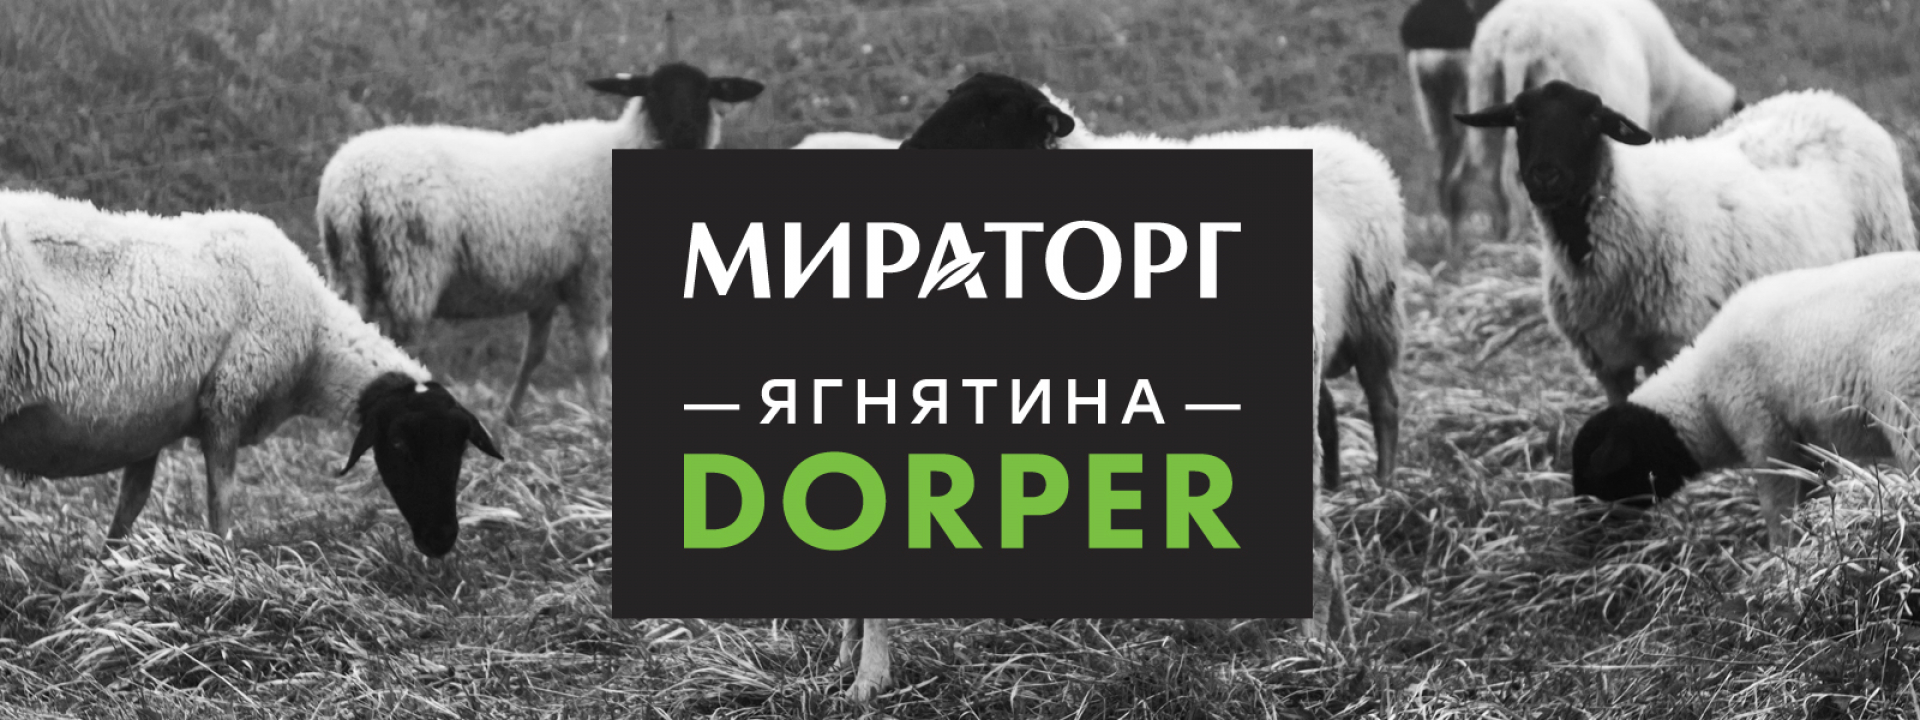 Брендинг мяса Мираторг Dorper